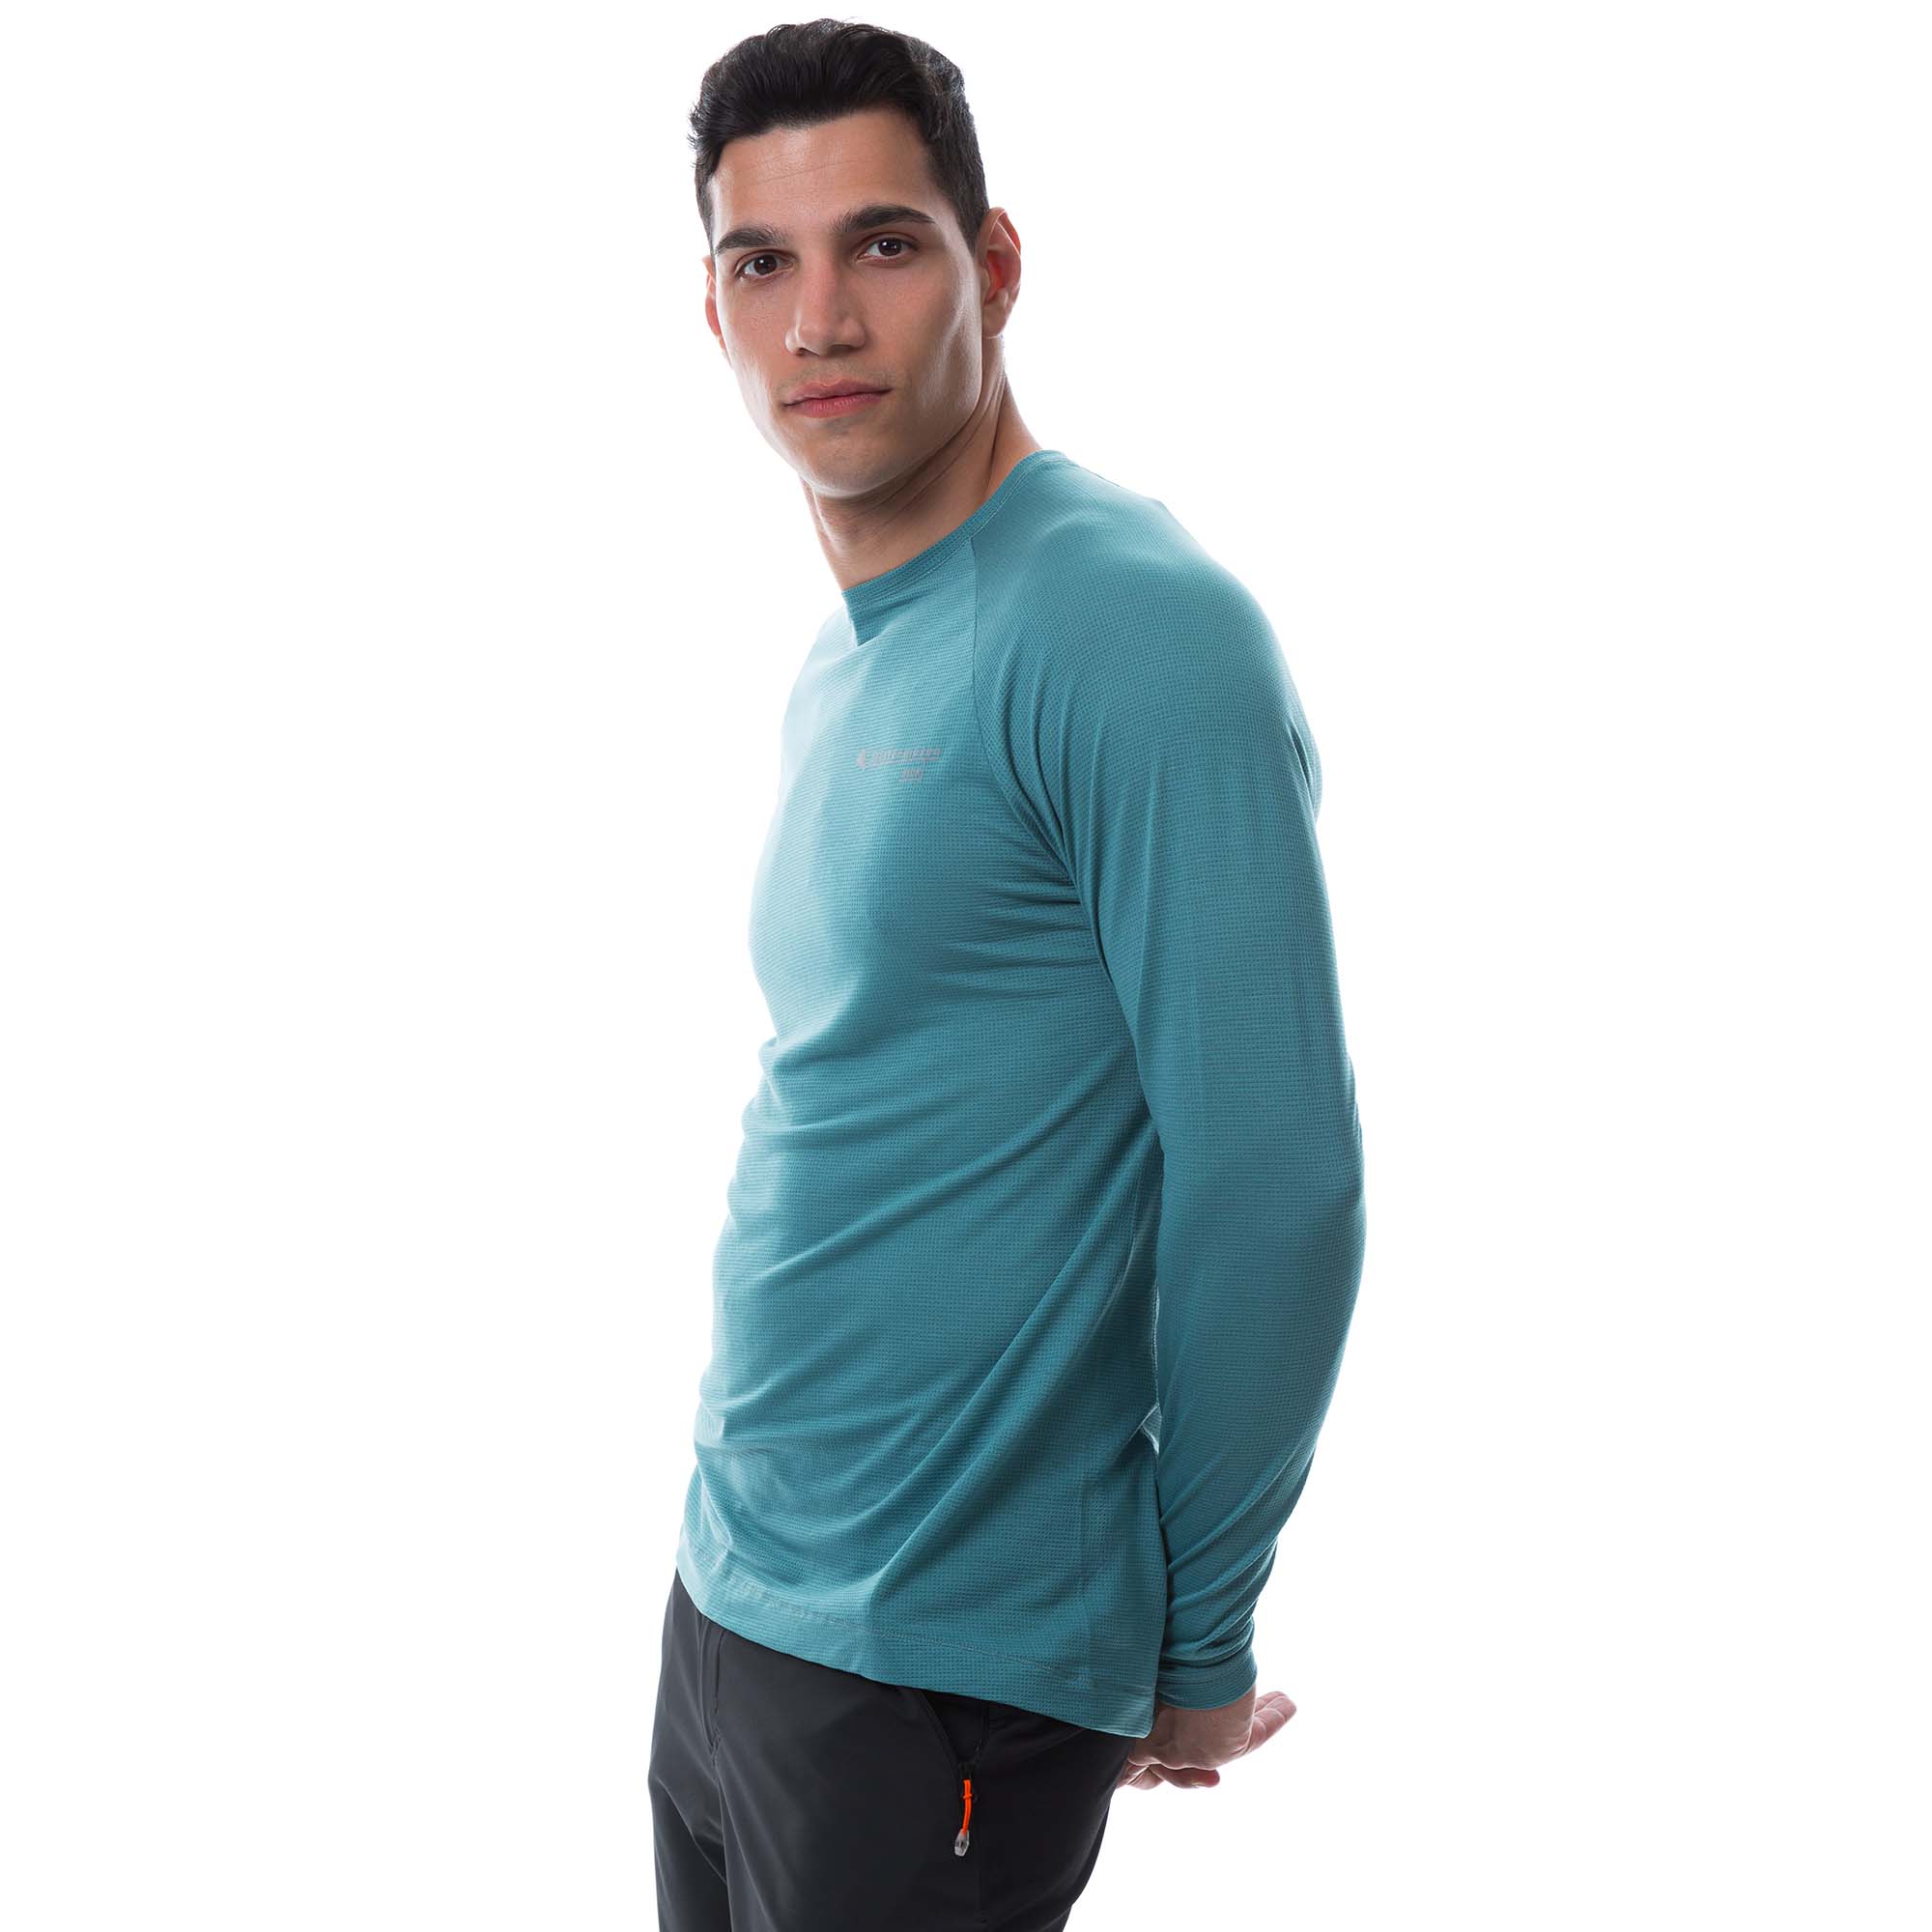 Klattermusen Groa Long Sleeve Technical T-Shirt